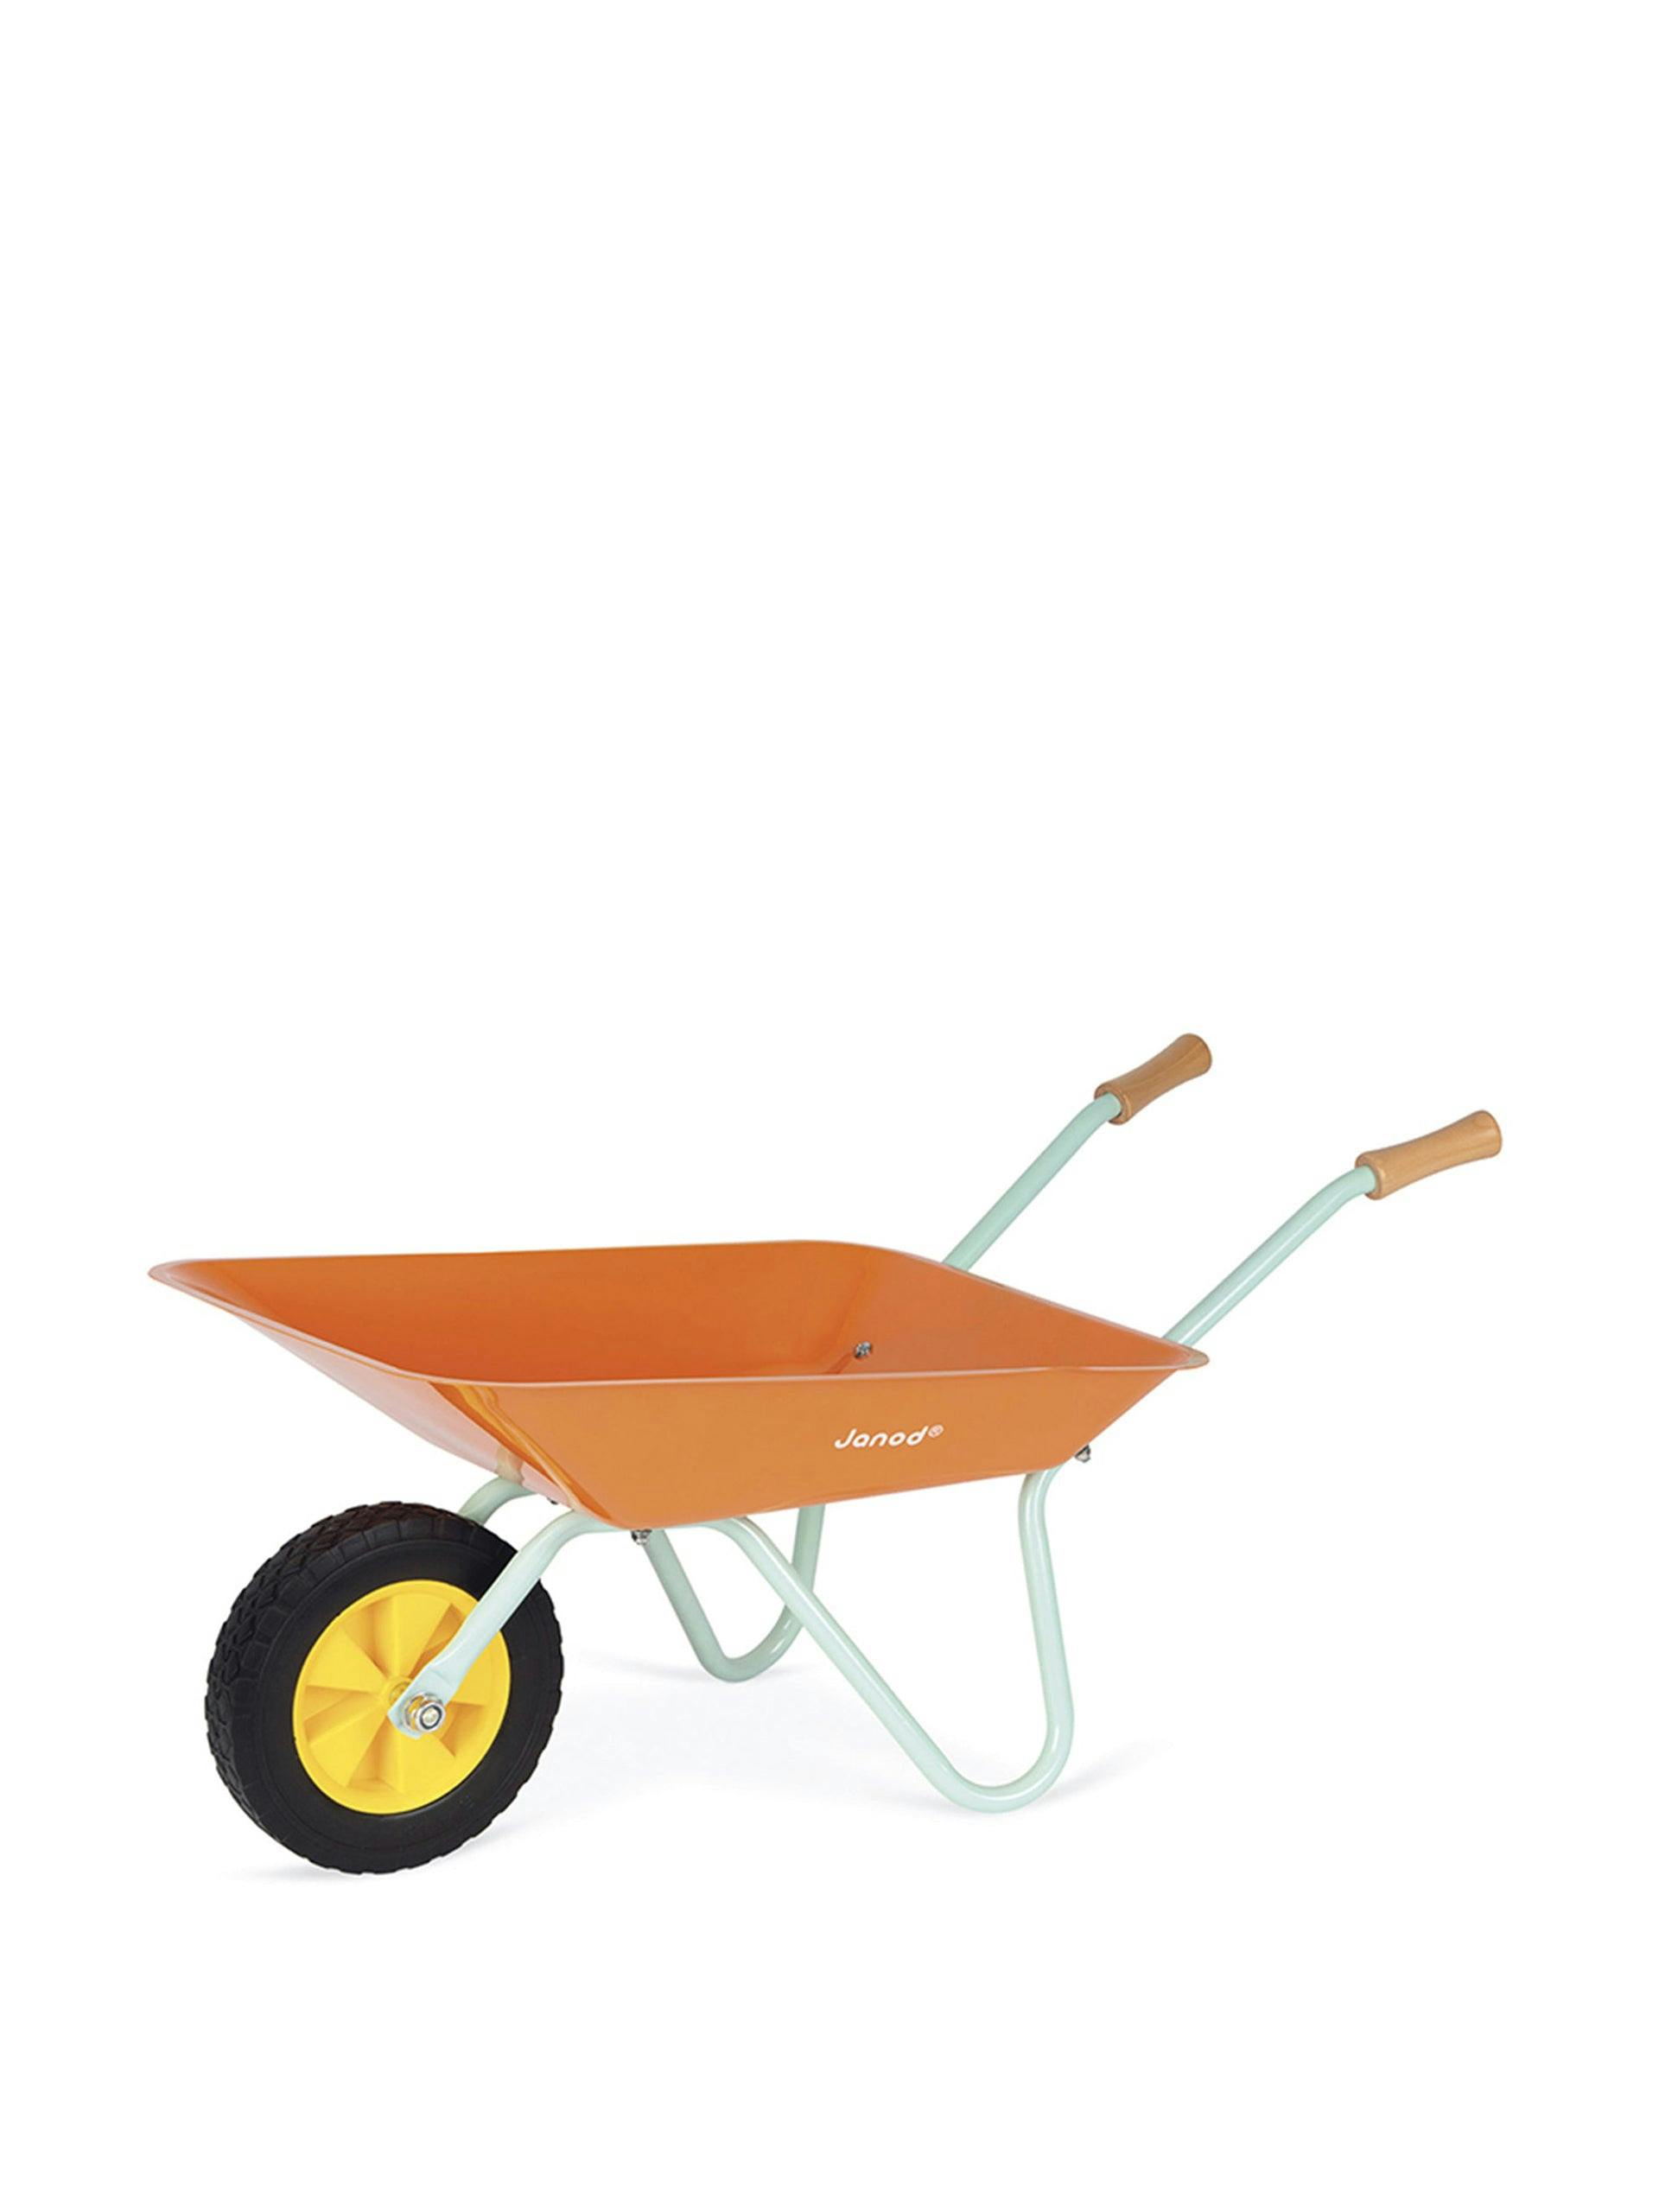 Orange metal wheelbarrow